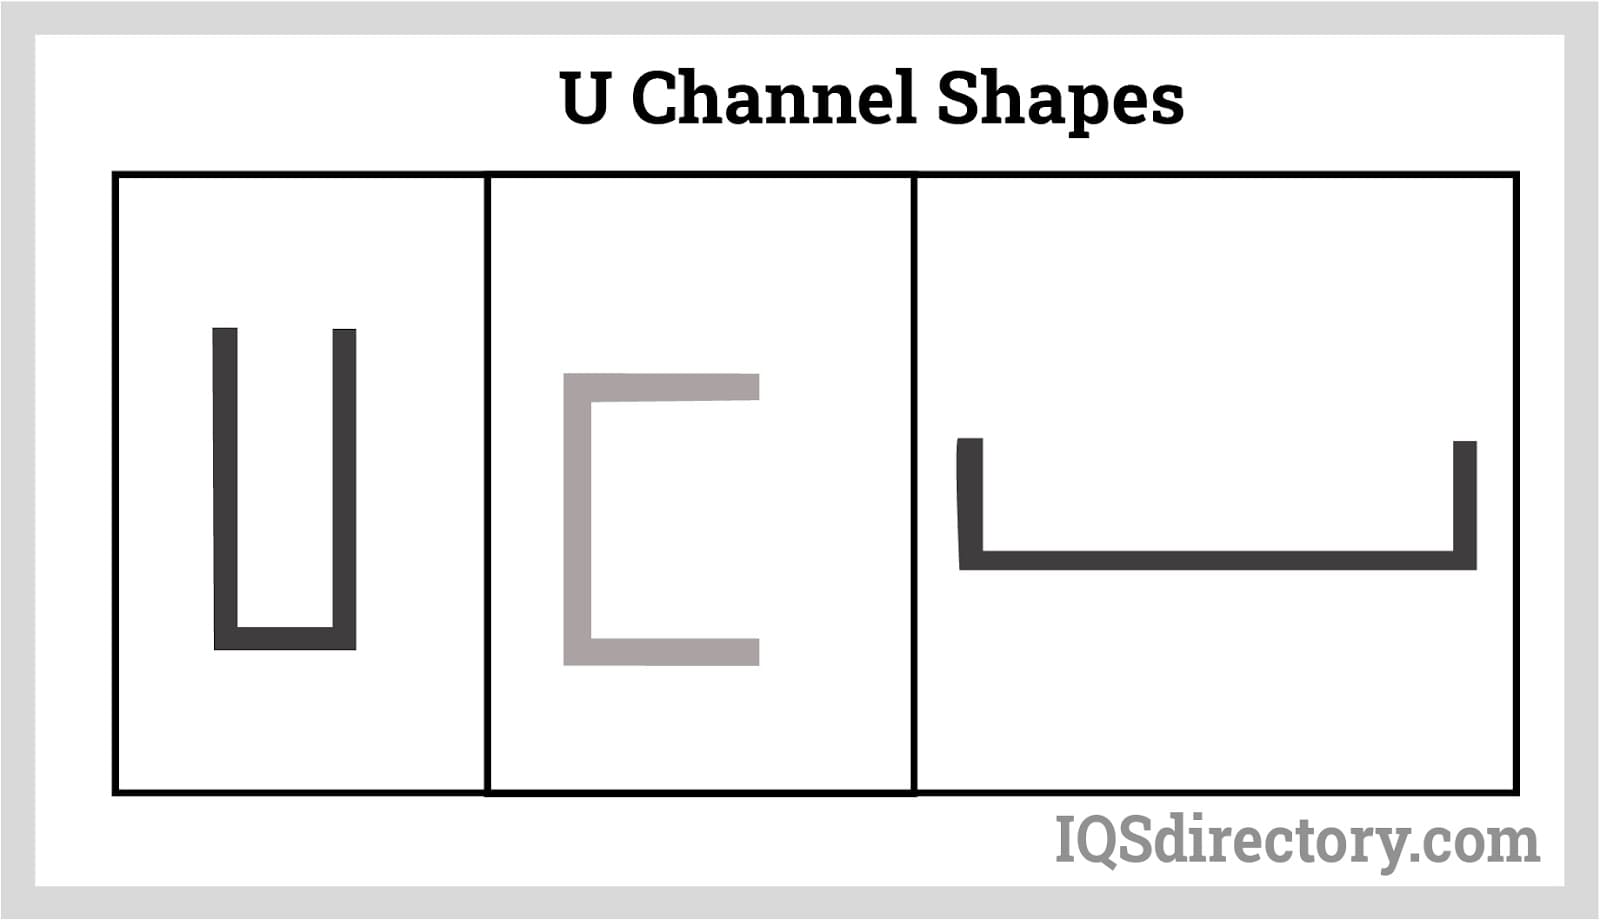 U Channel Shapes